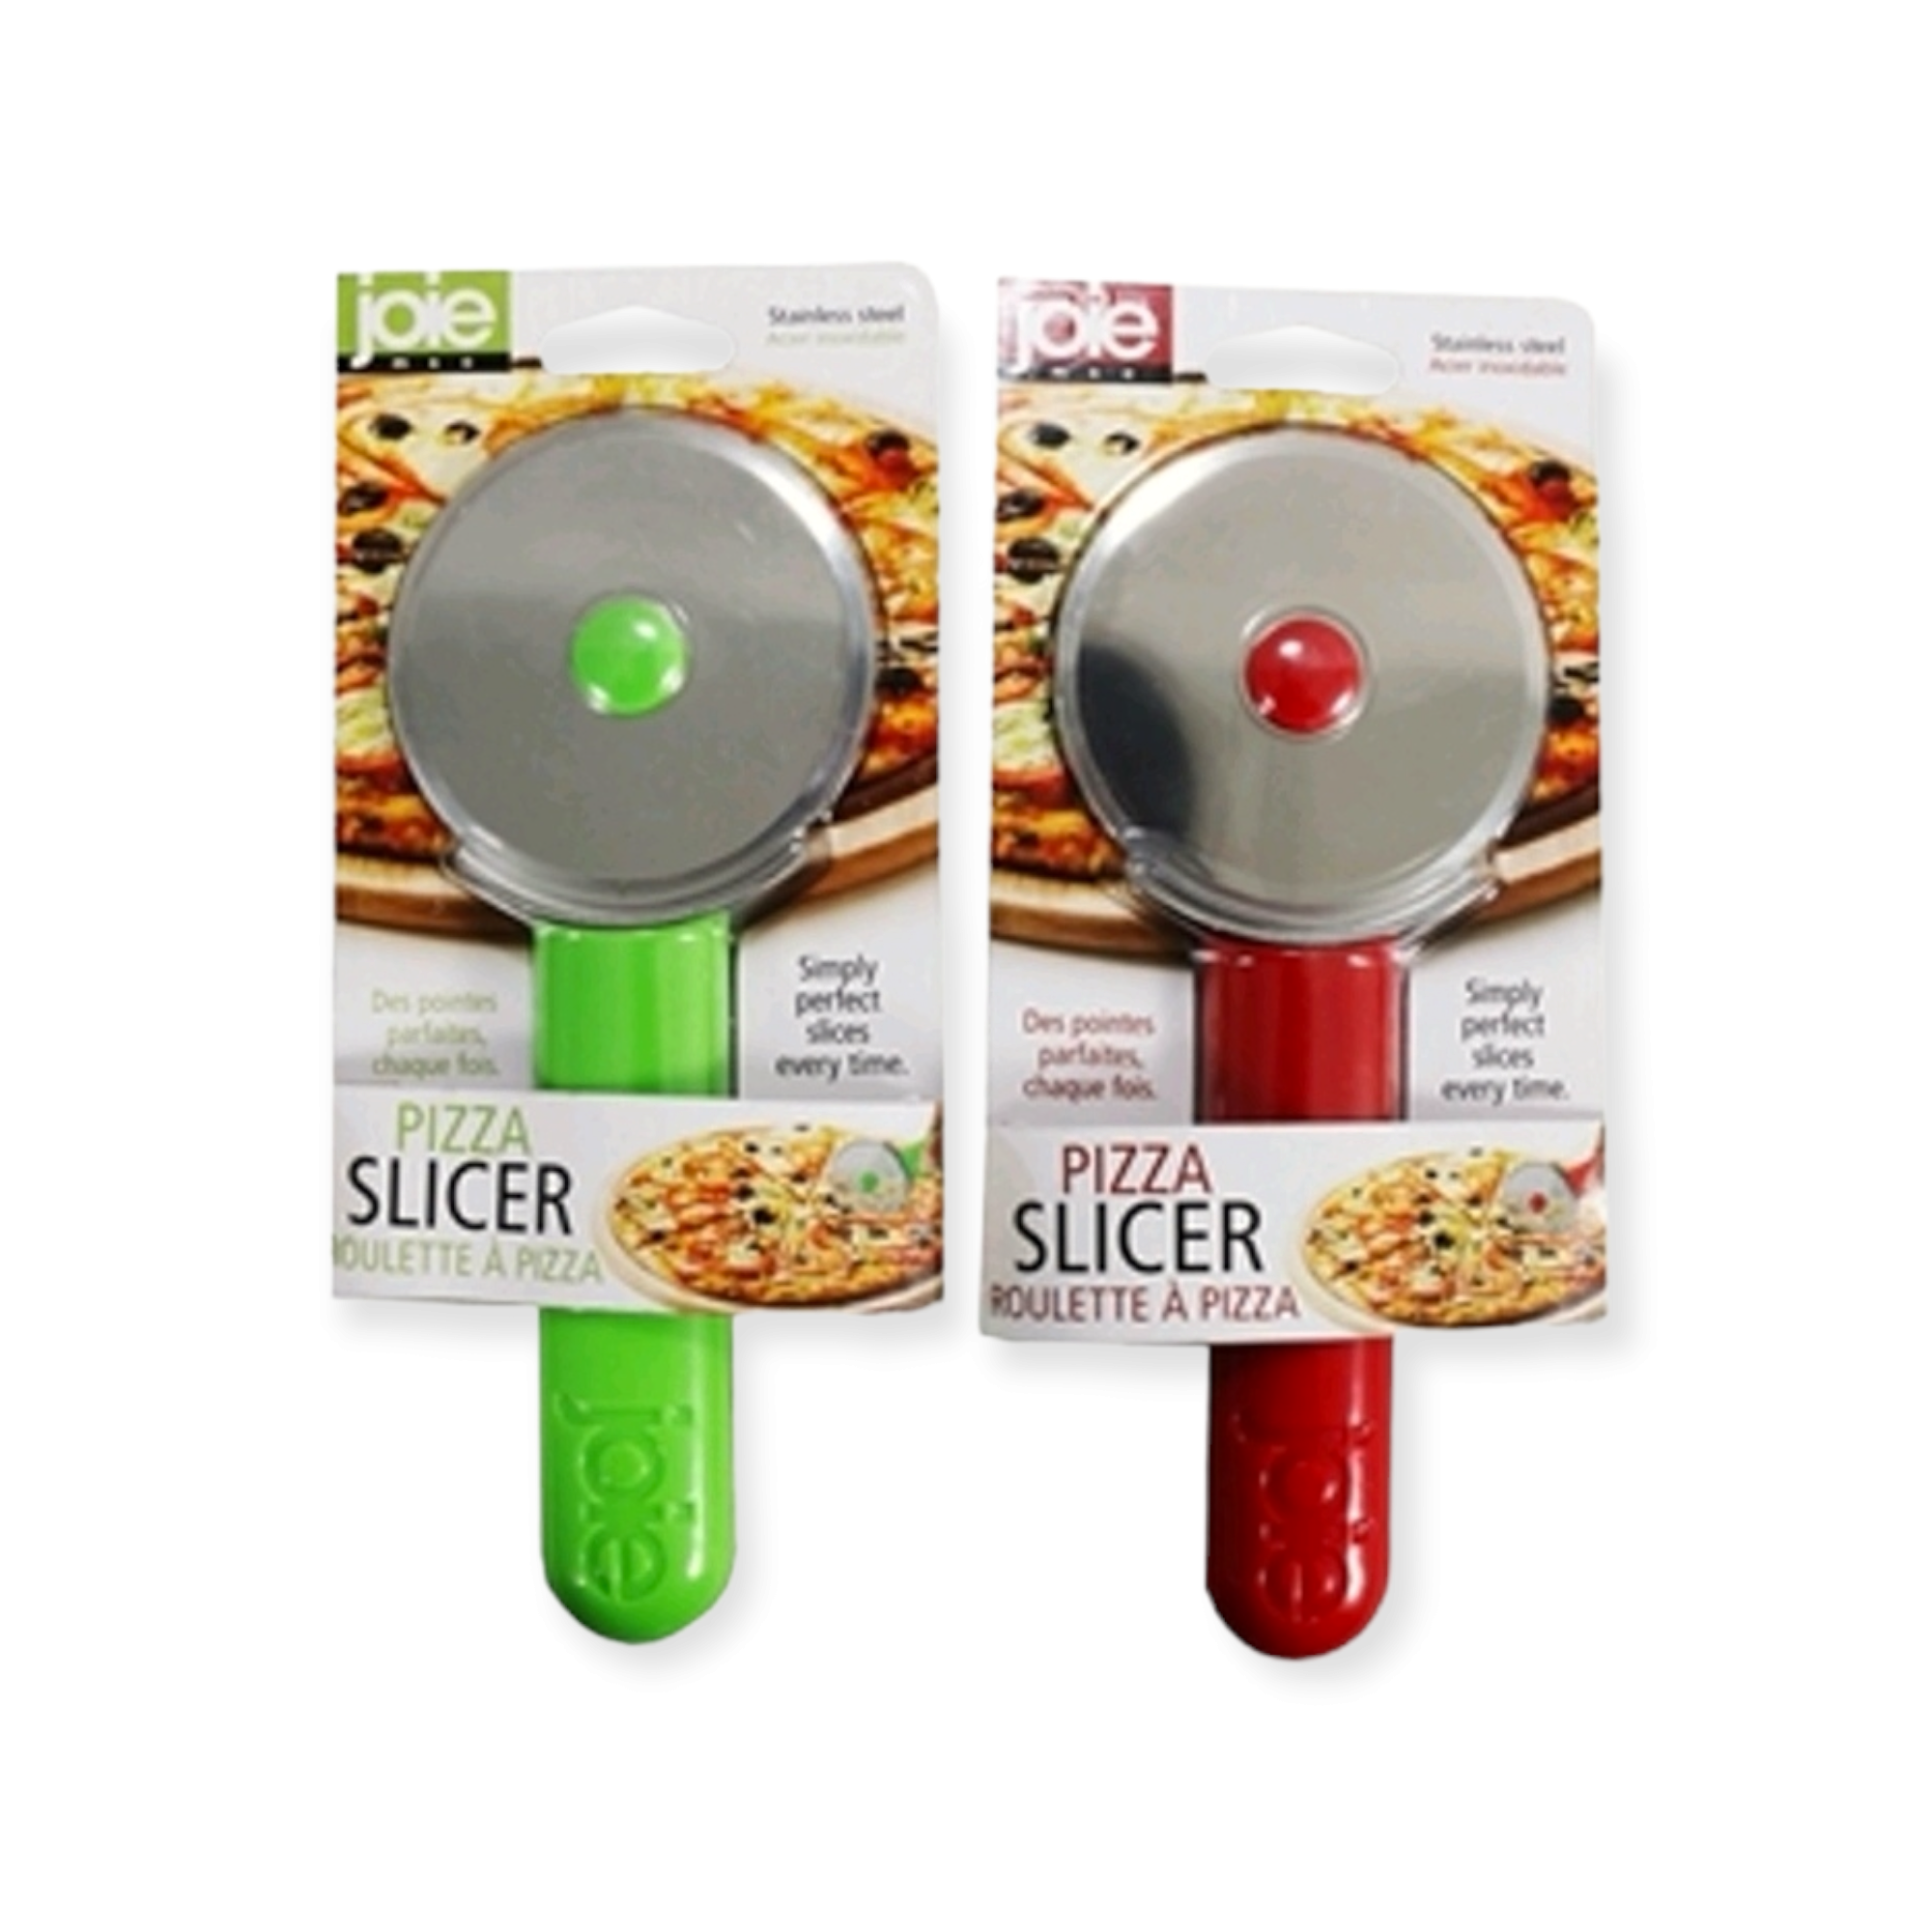 Joie Pizza Cutter Slicer 15739